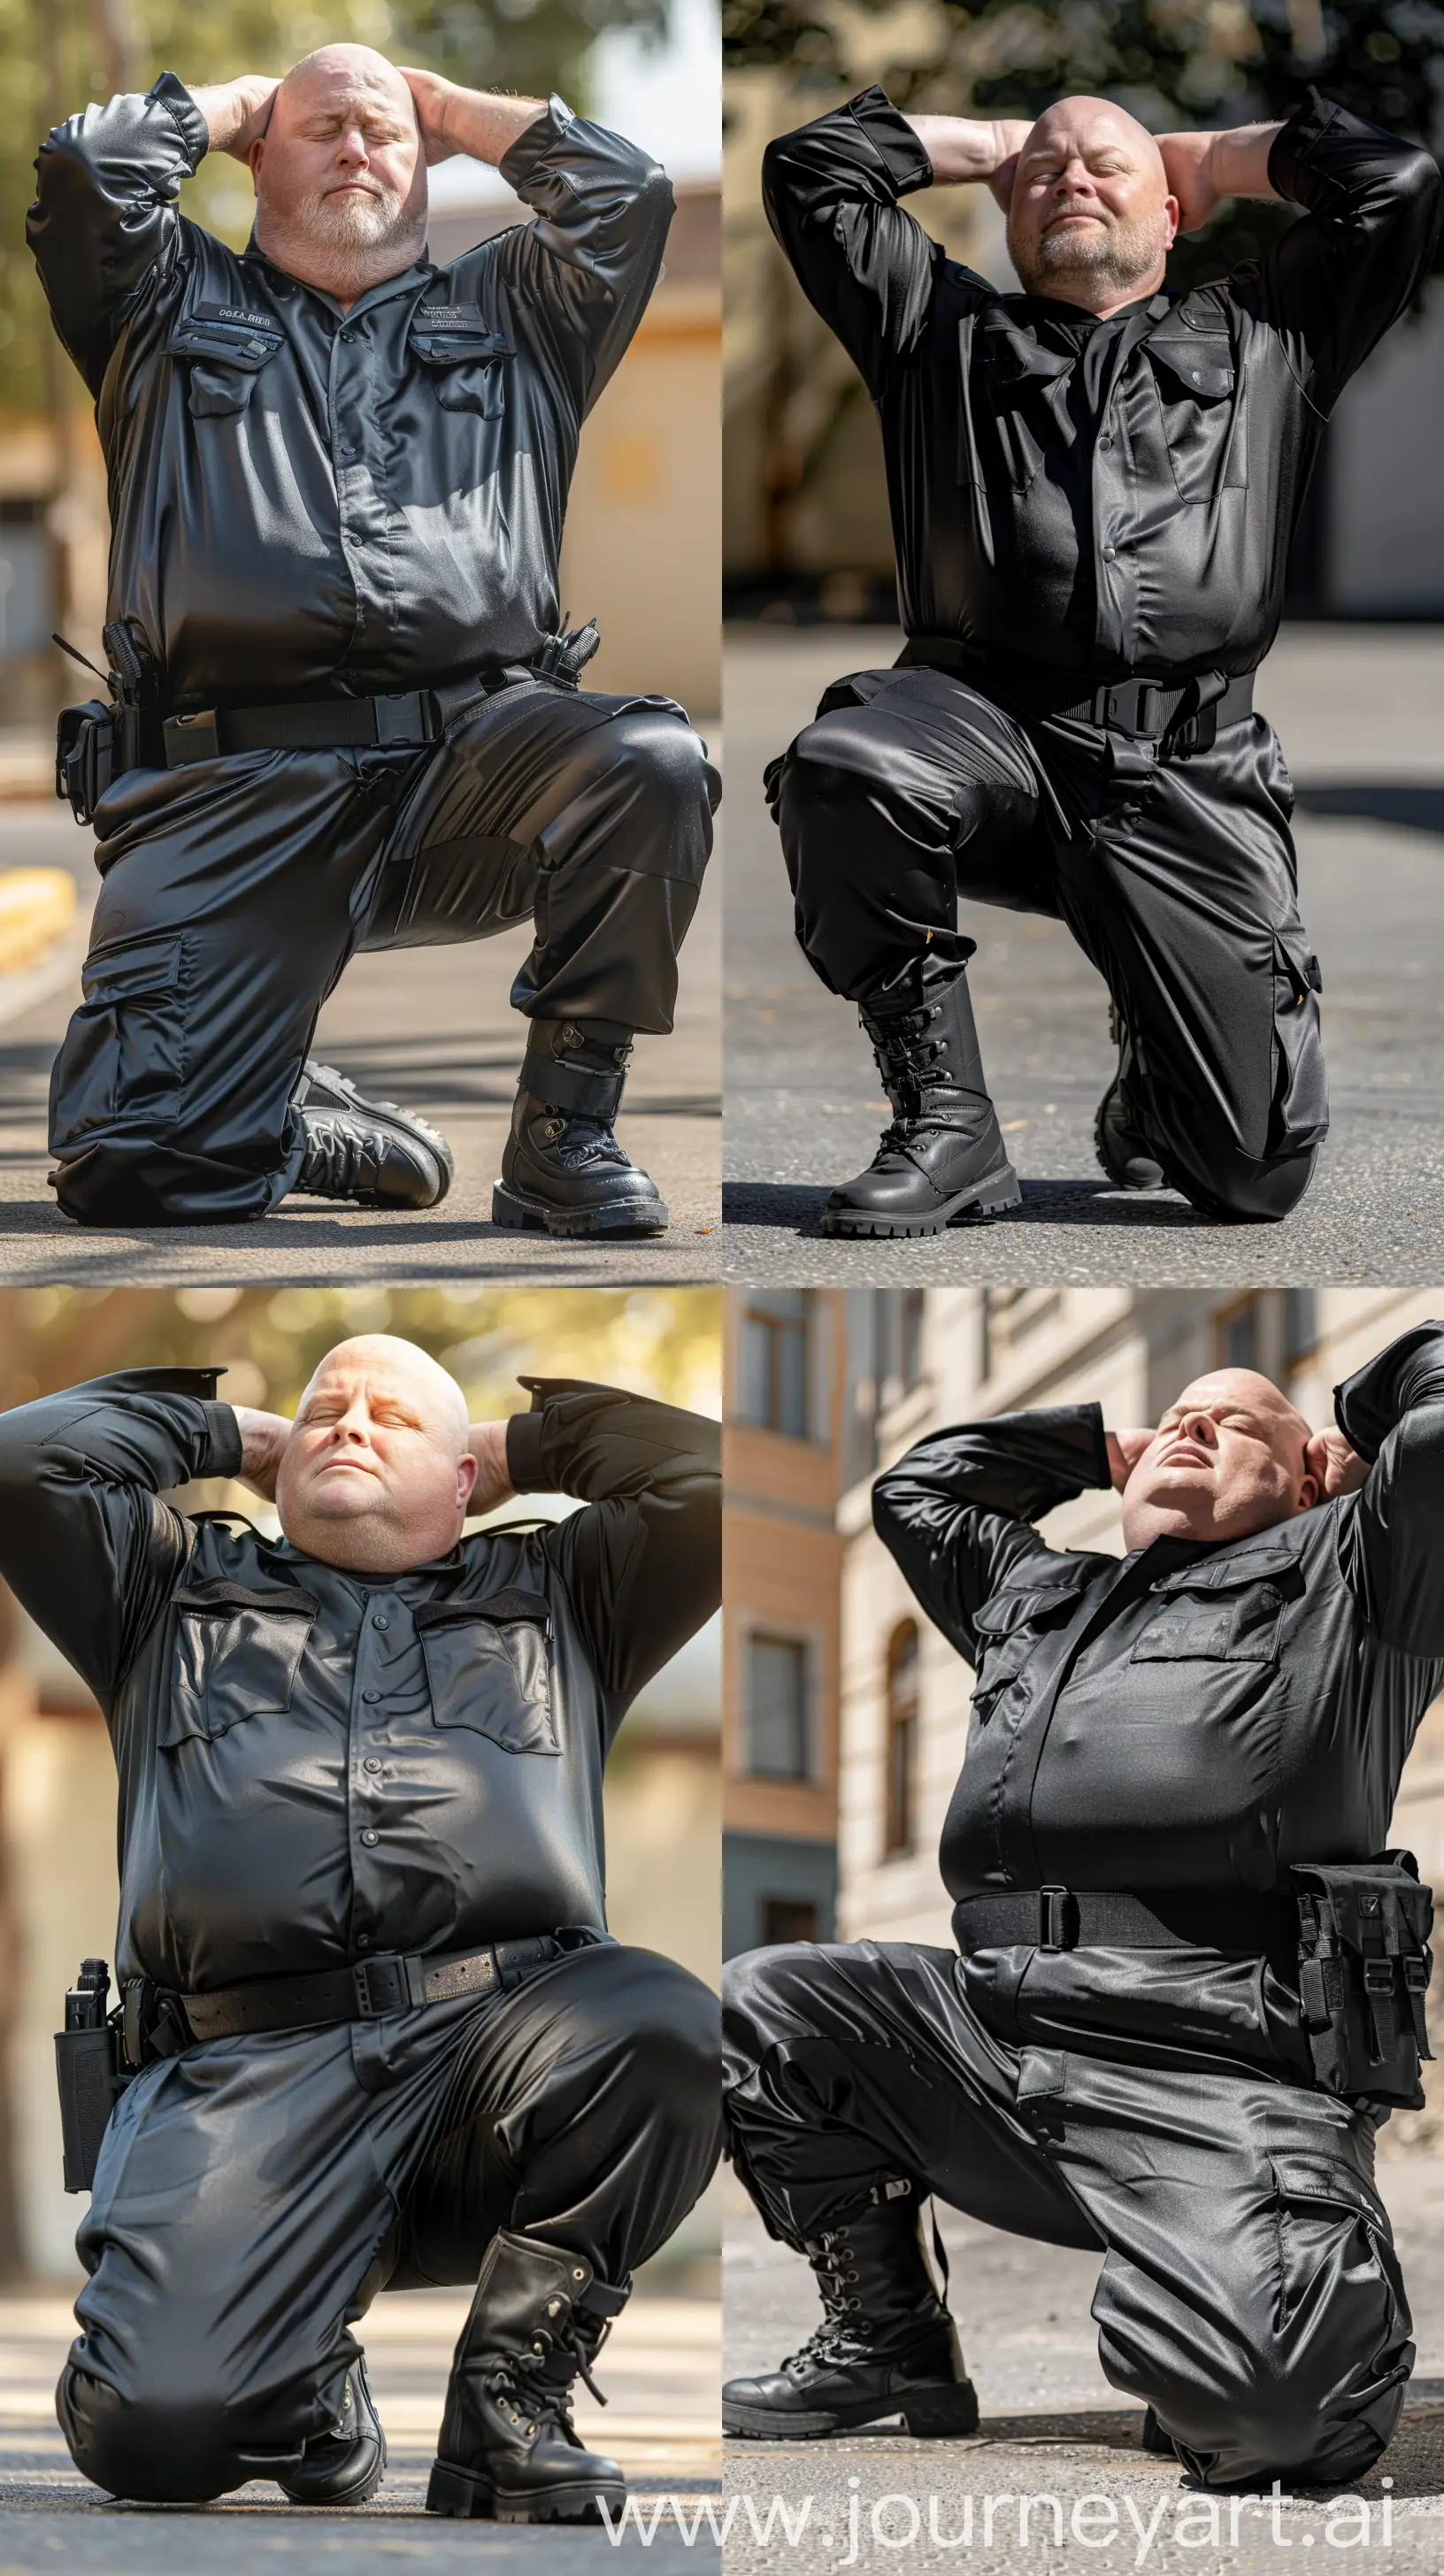 Elderly-Security-Guard-Kneeling-Outdoors-in-Black-Tactical-Gear